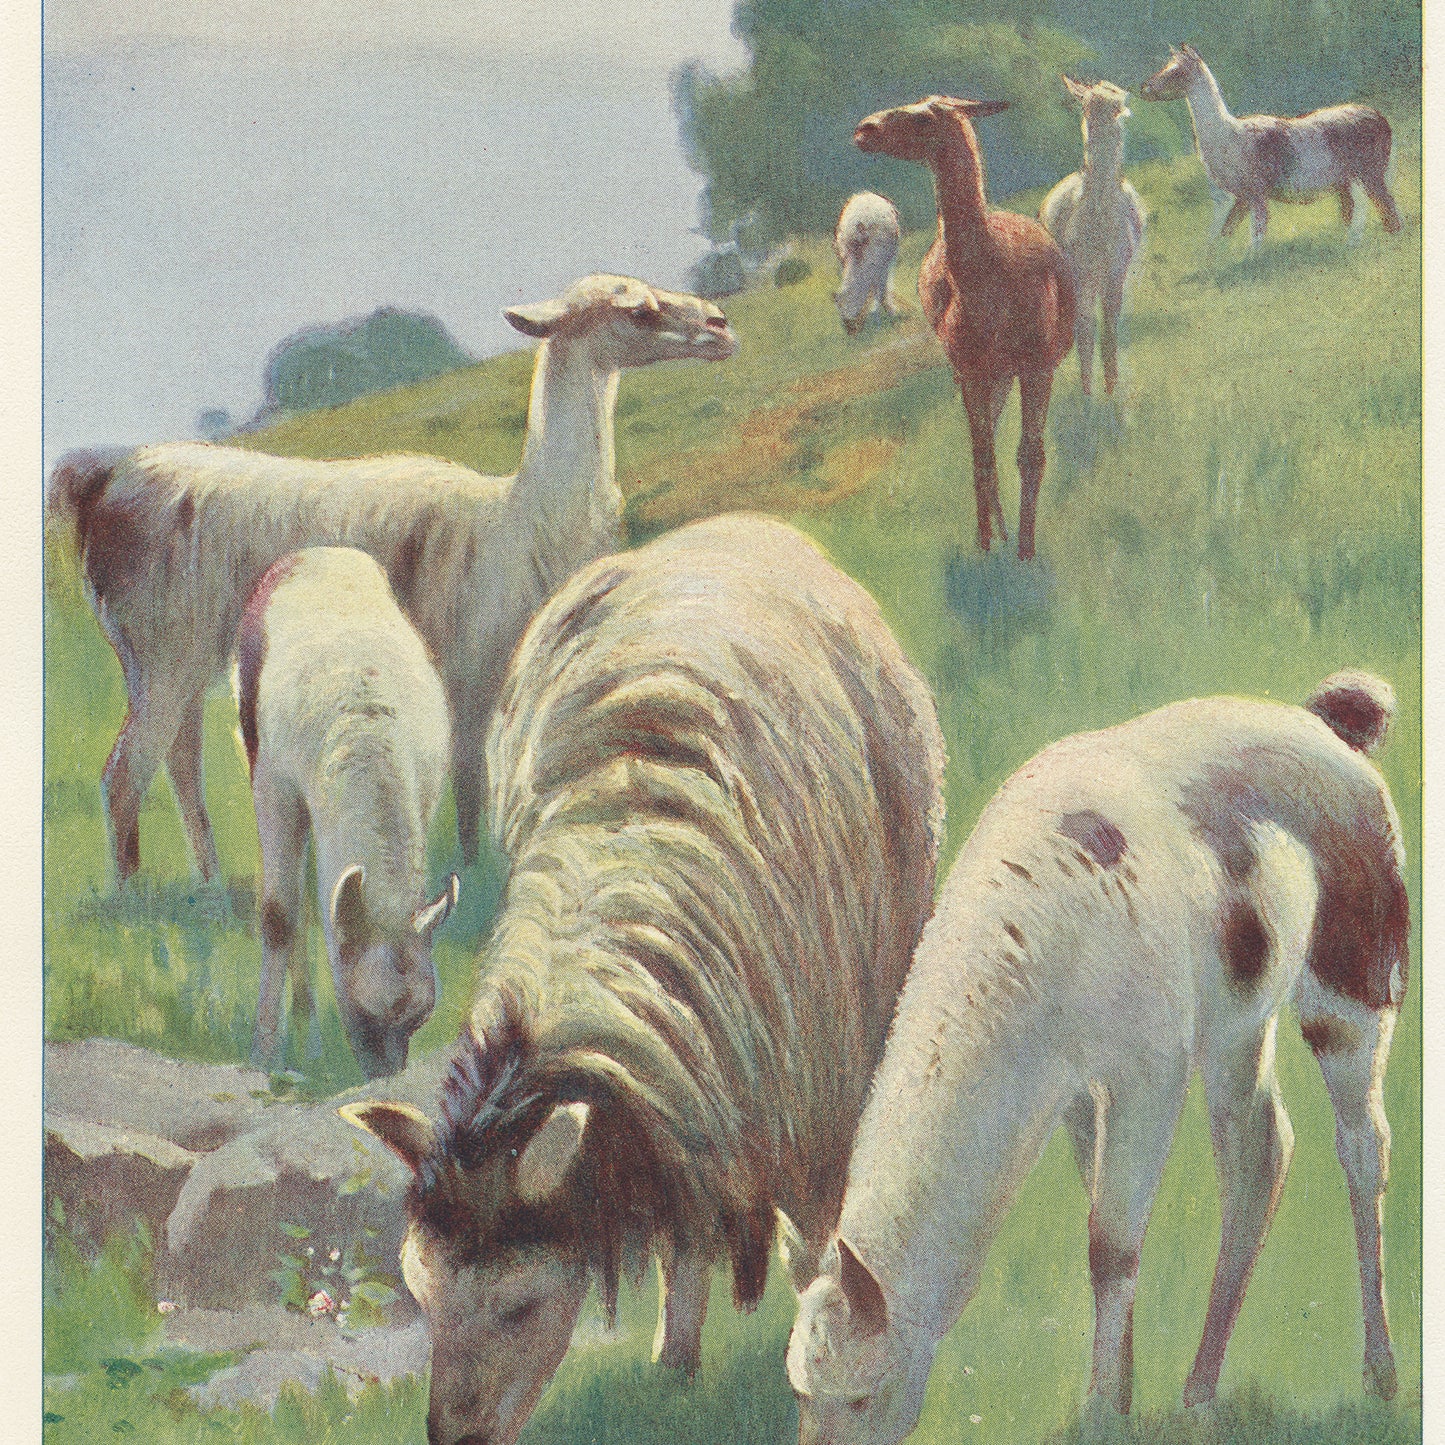 1916 Antique Llama print